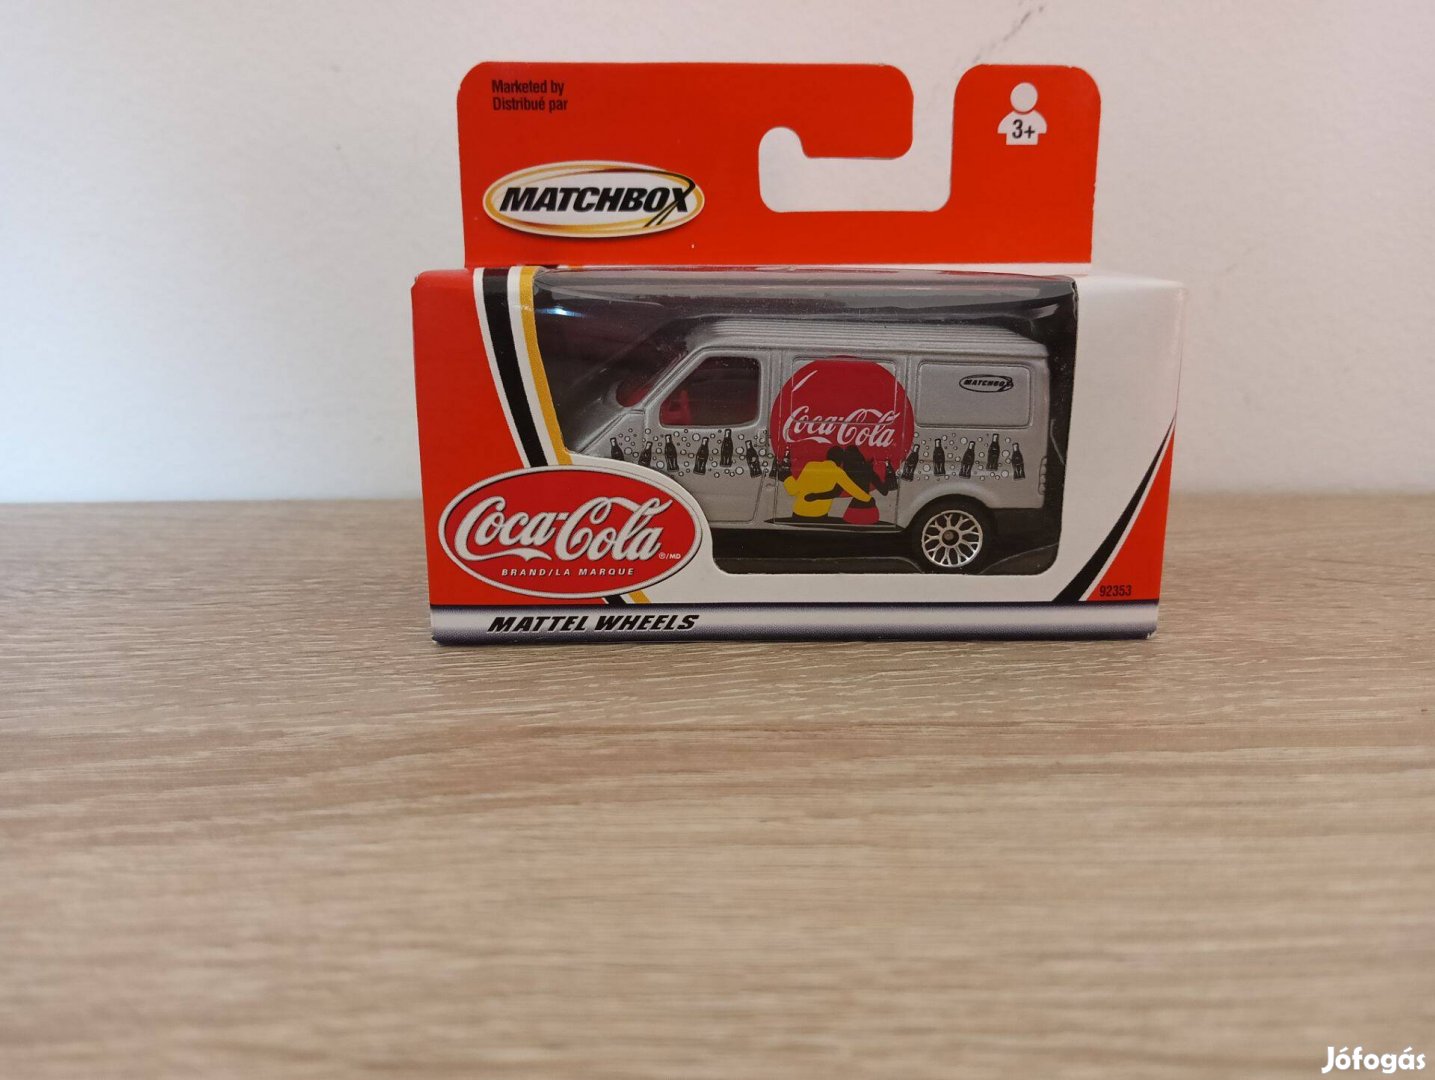 Matchbox Mattel Wheels 2002 Coca Cola Ford Transit